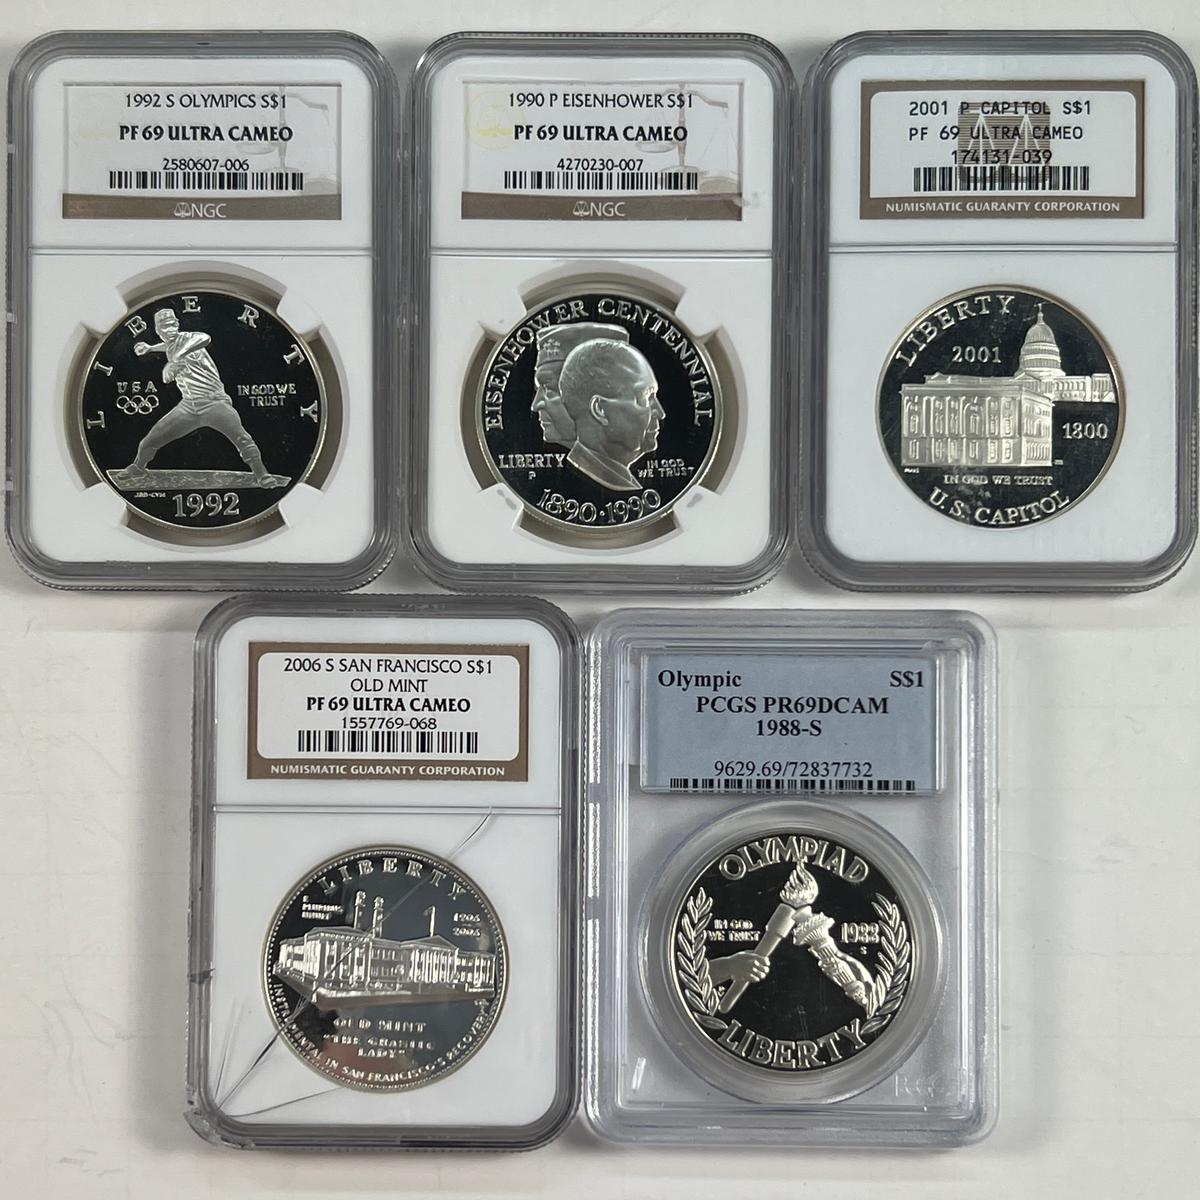 Lot of 5 certified proof U.S. commemorative silver dollars